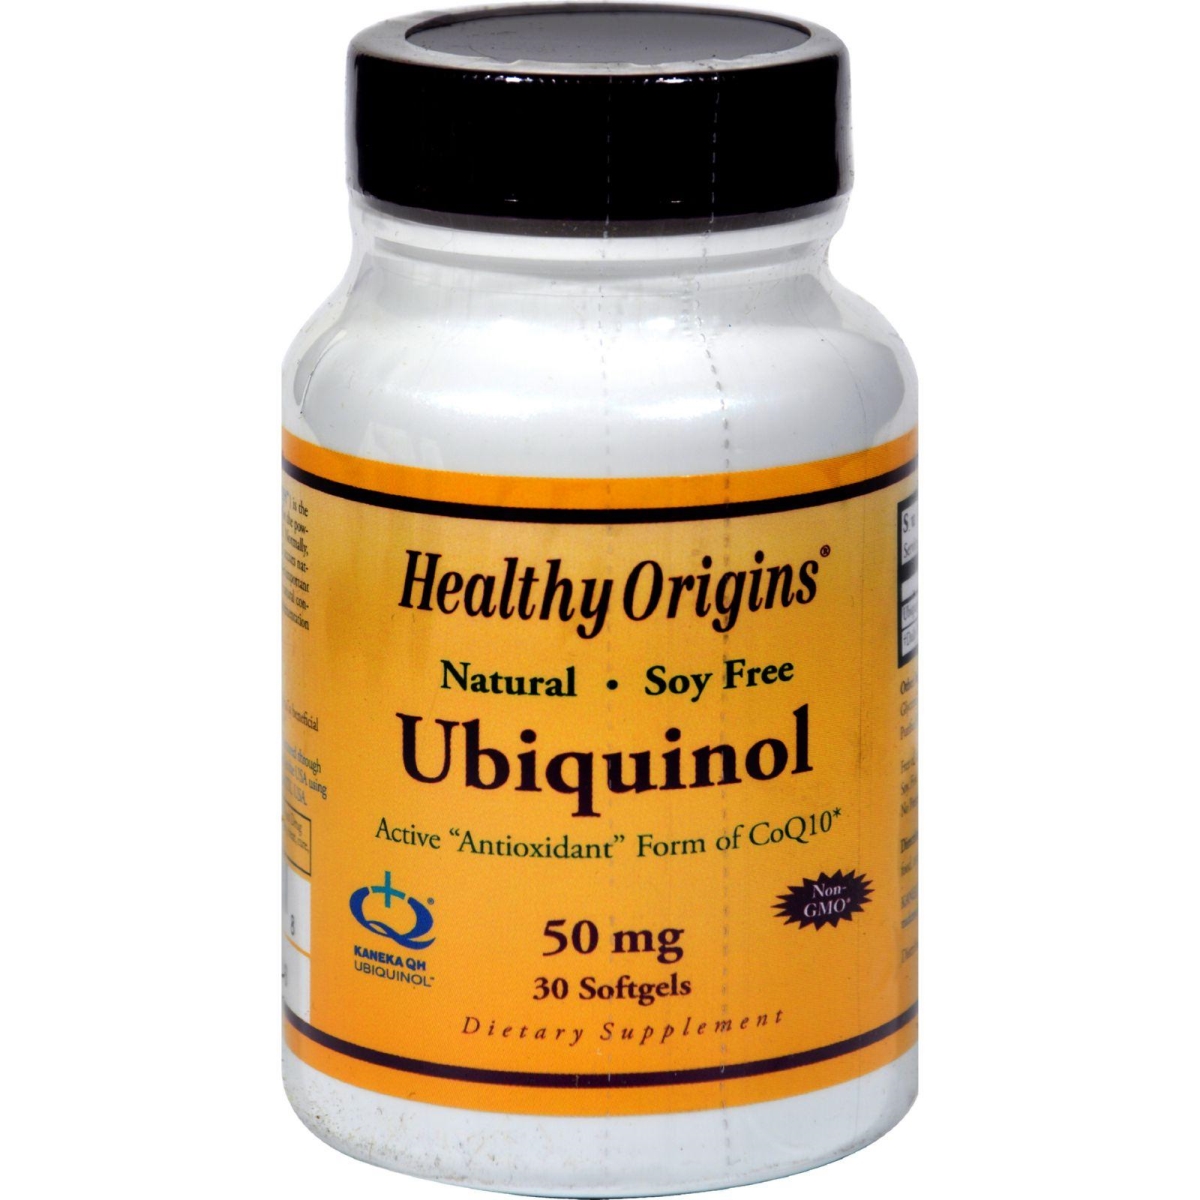 Hg0147199 50 Mg Ubiquinol, 30 Softgels